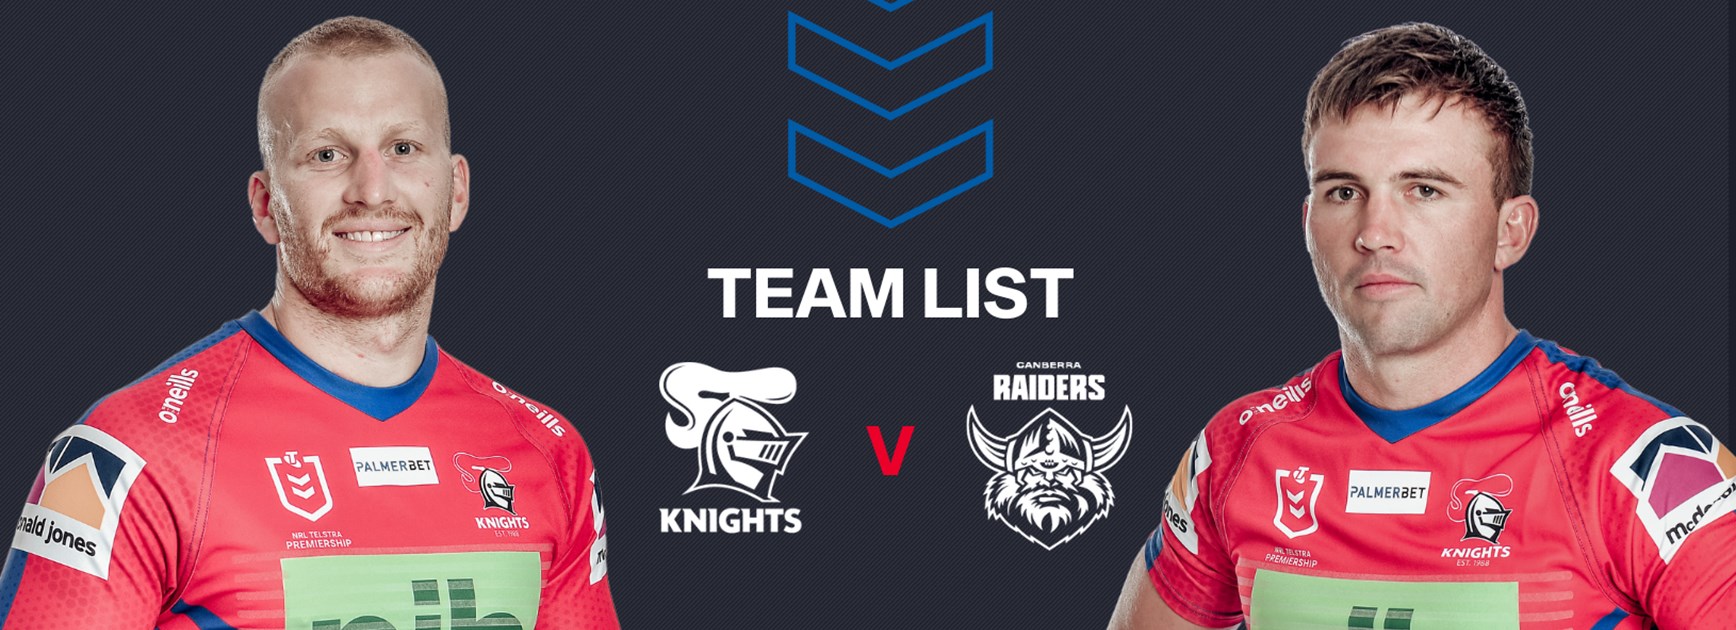 Raiders v Knights Round 15 NRL team list